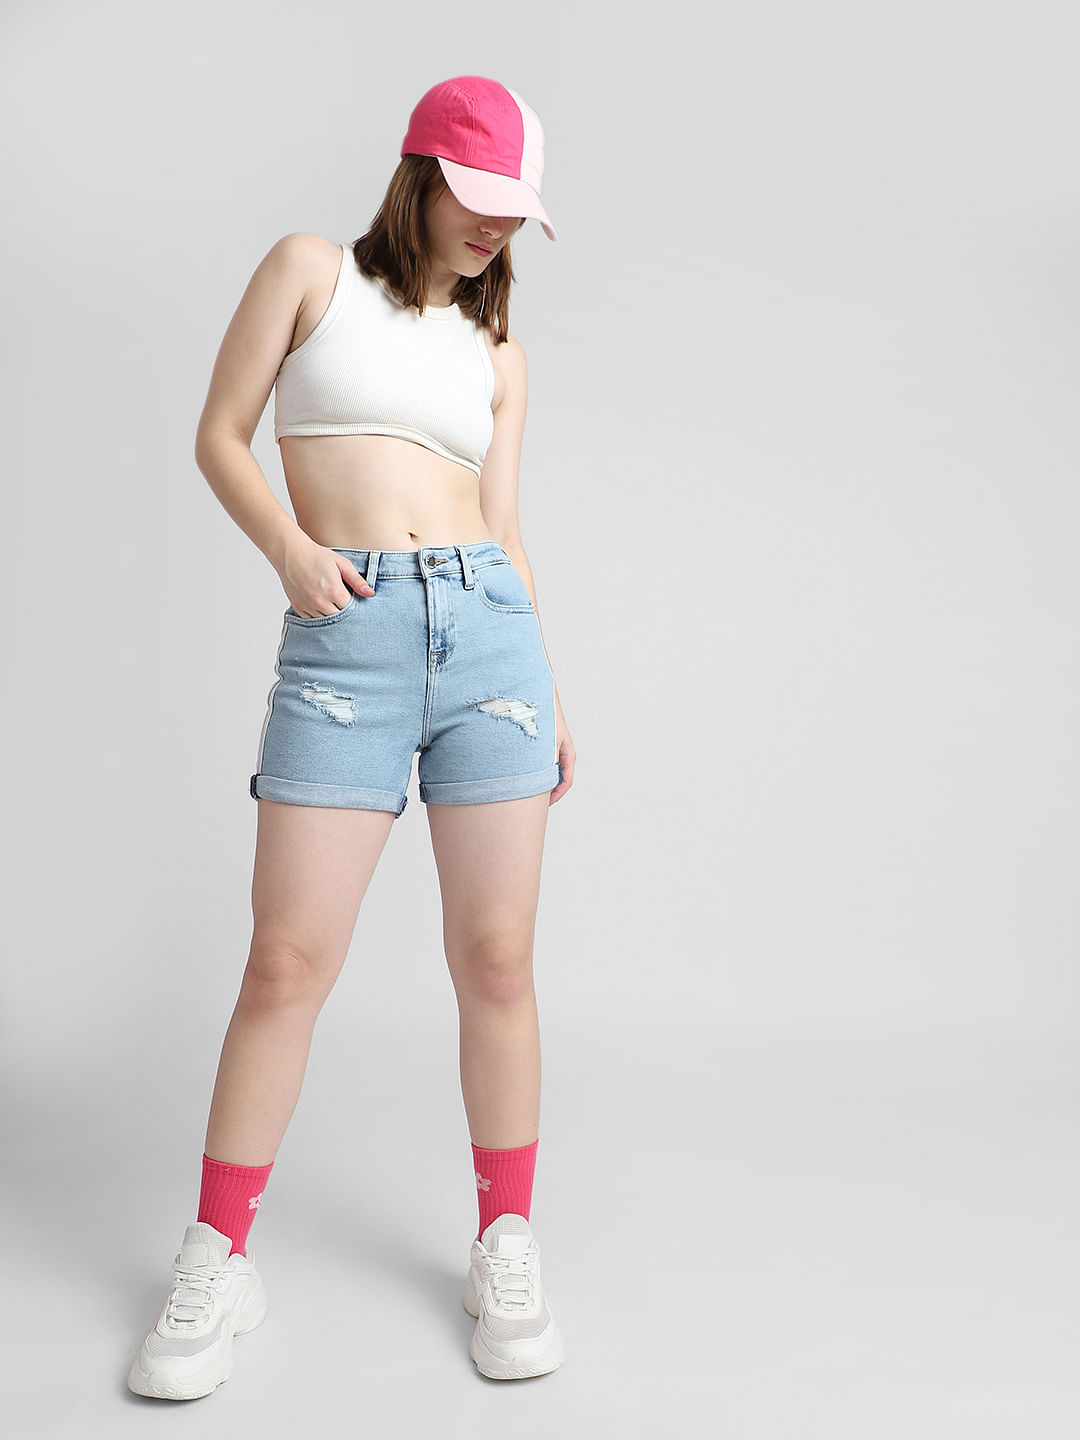 6 ways to style denim shorts this summer - Life on Shady Lane